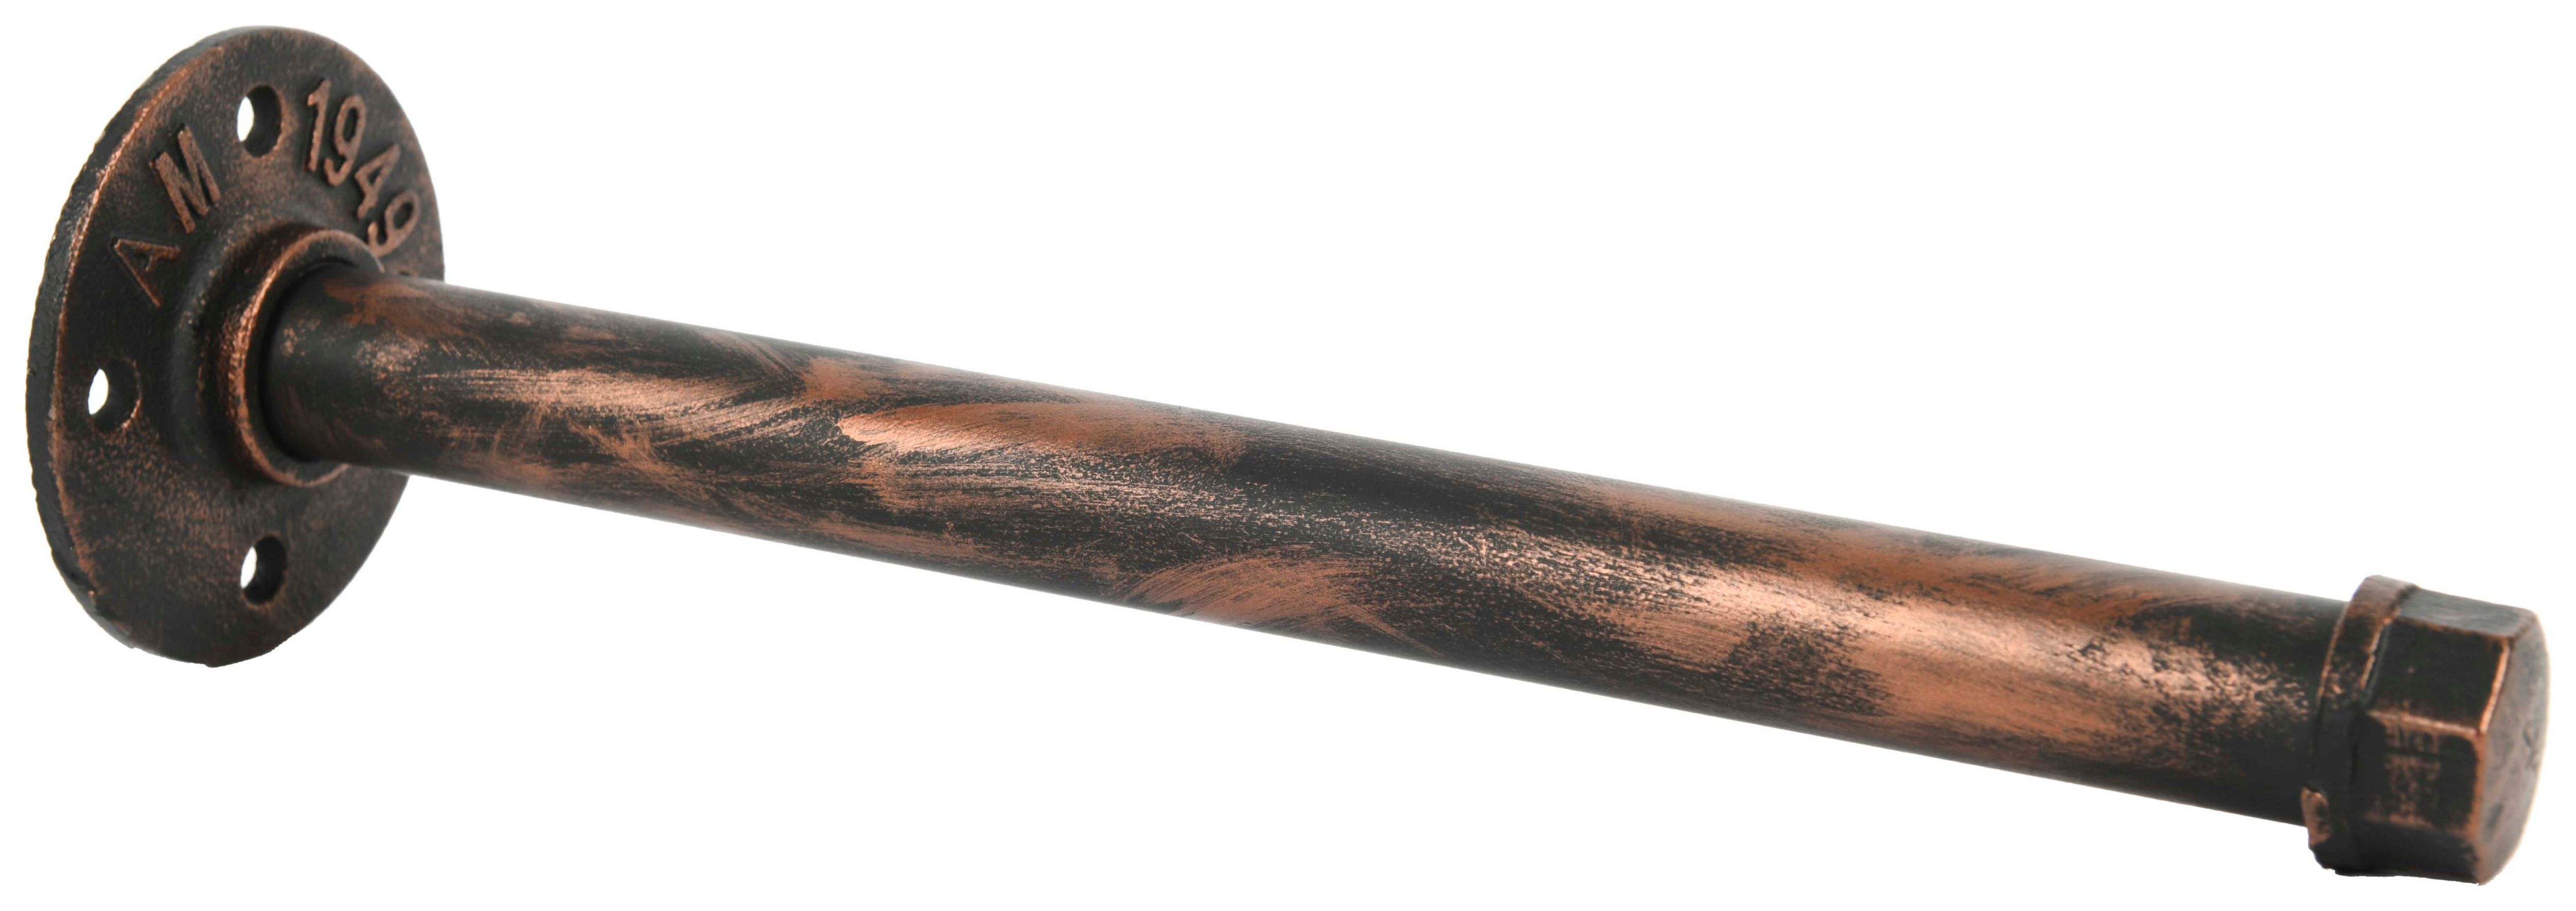 Image of Wickes Pipe Antique Copper Shelf Bracket - 150mm